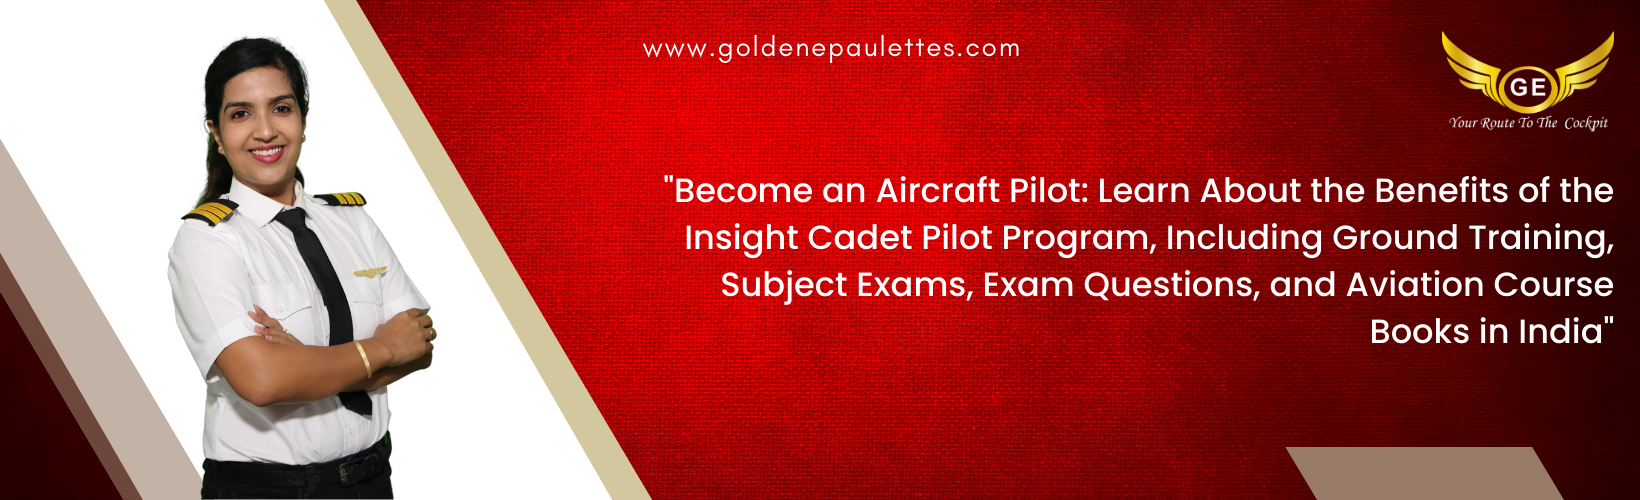 Benefits of the Insight Cadet Pilot Program